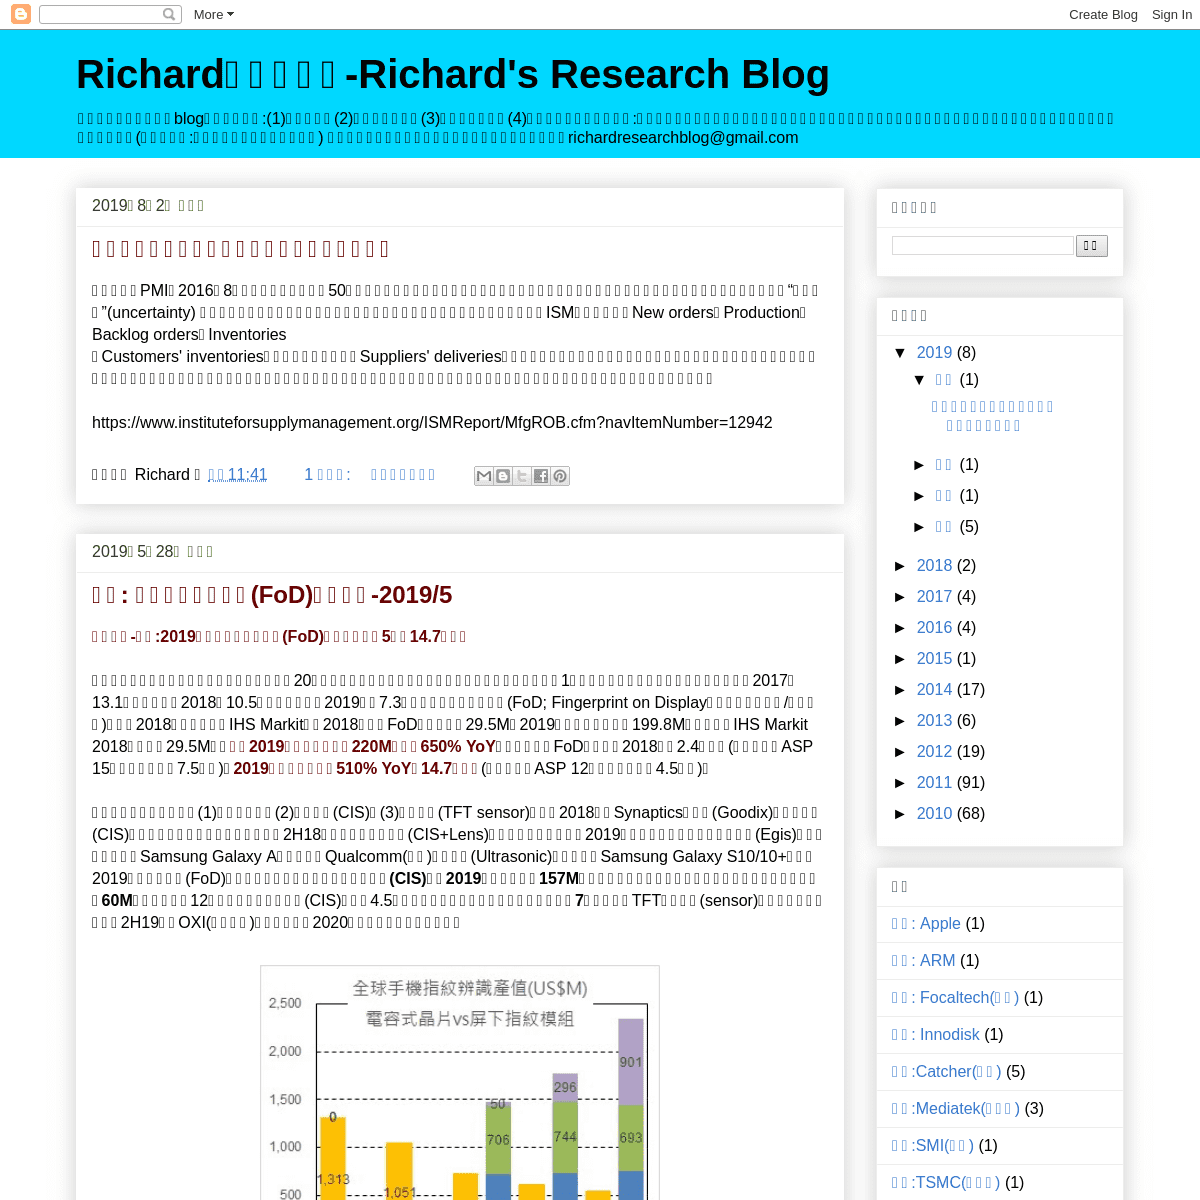 A complete backup of richard-rrb.blogspot.com